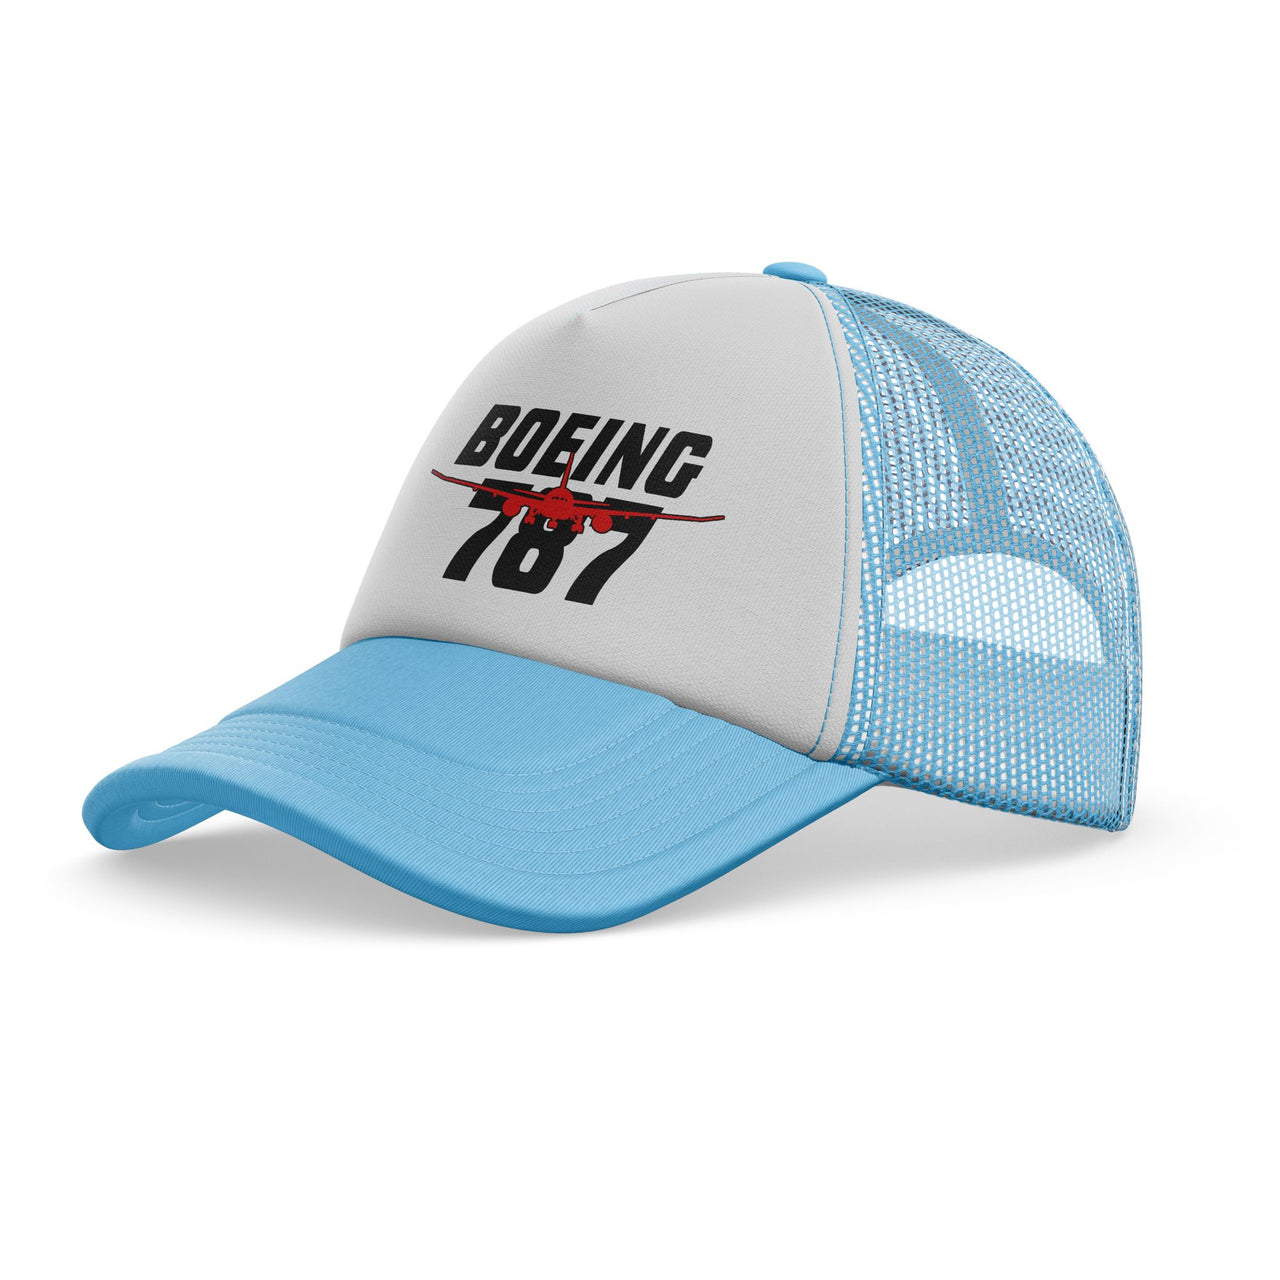 Amazing Boeing 787 Designed Trucker Caps & Hats